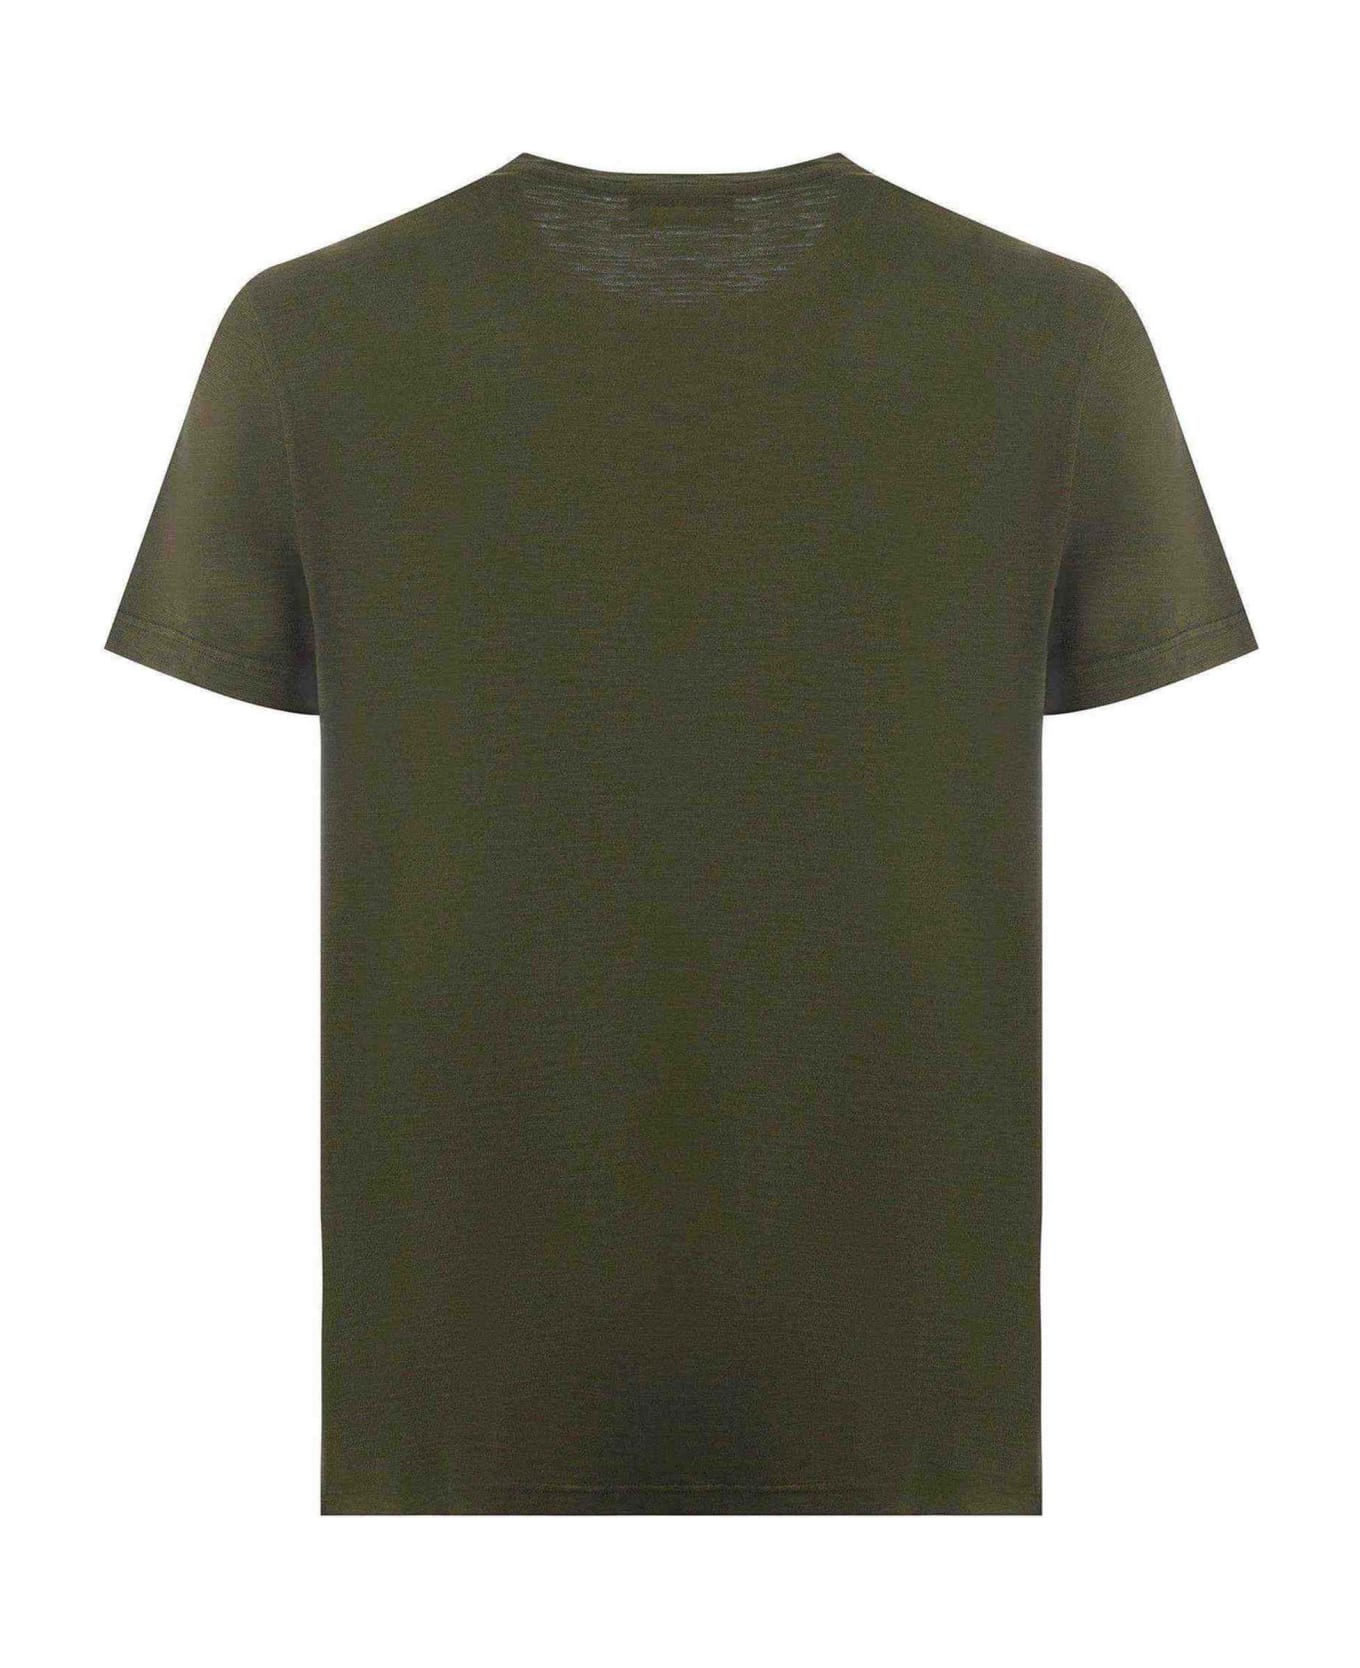 Dondup T-shirt - Verde militare シャツ